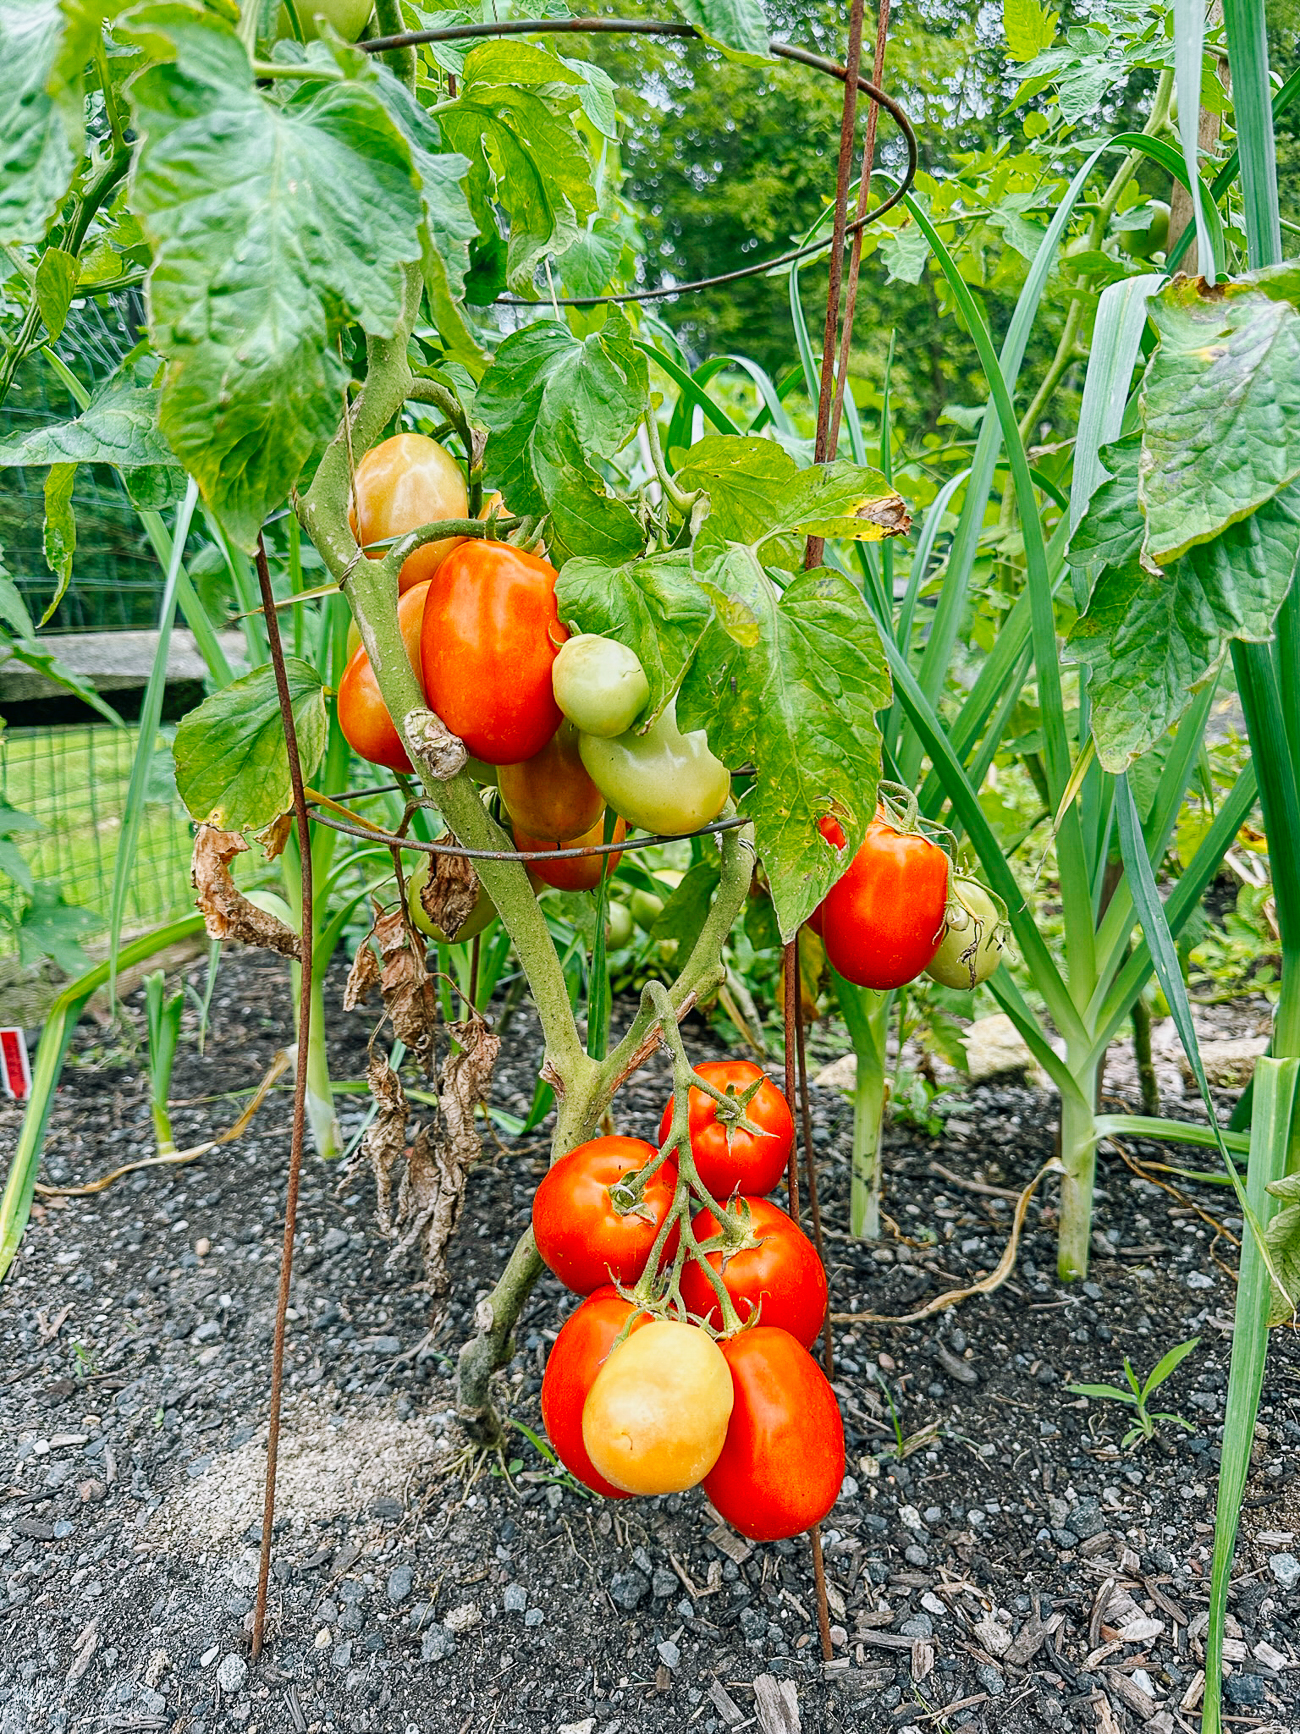 Plum Tomatoes on plant